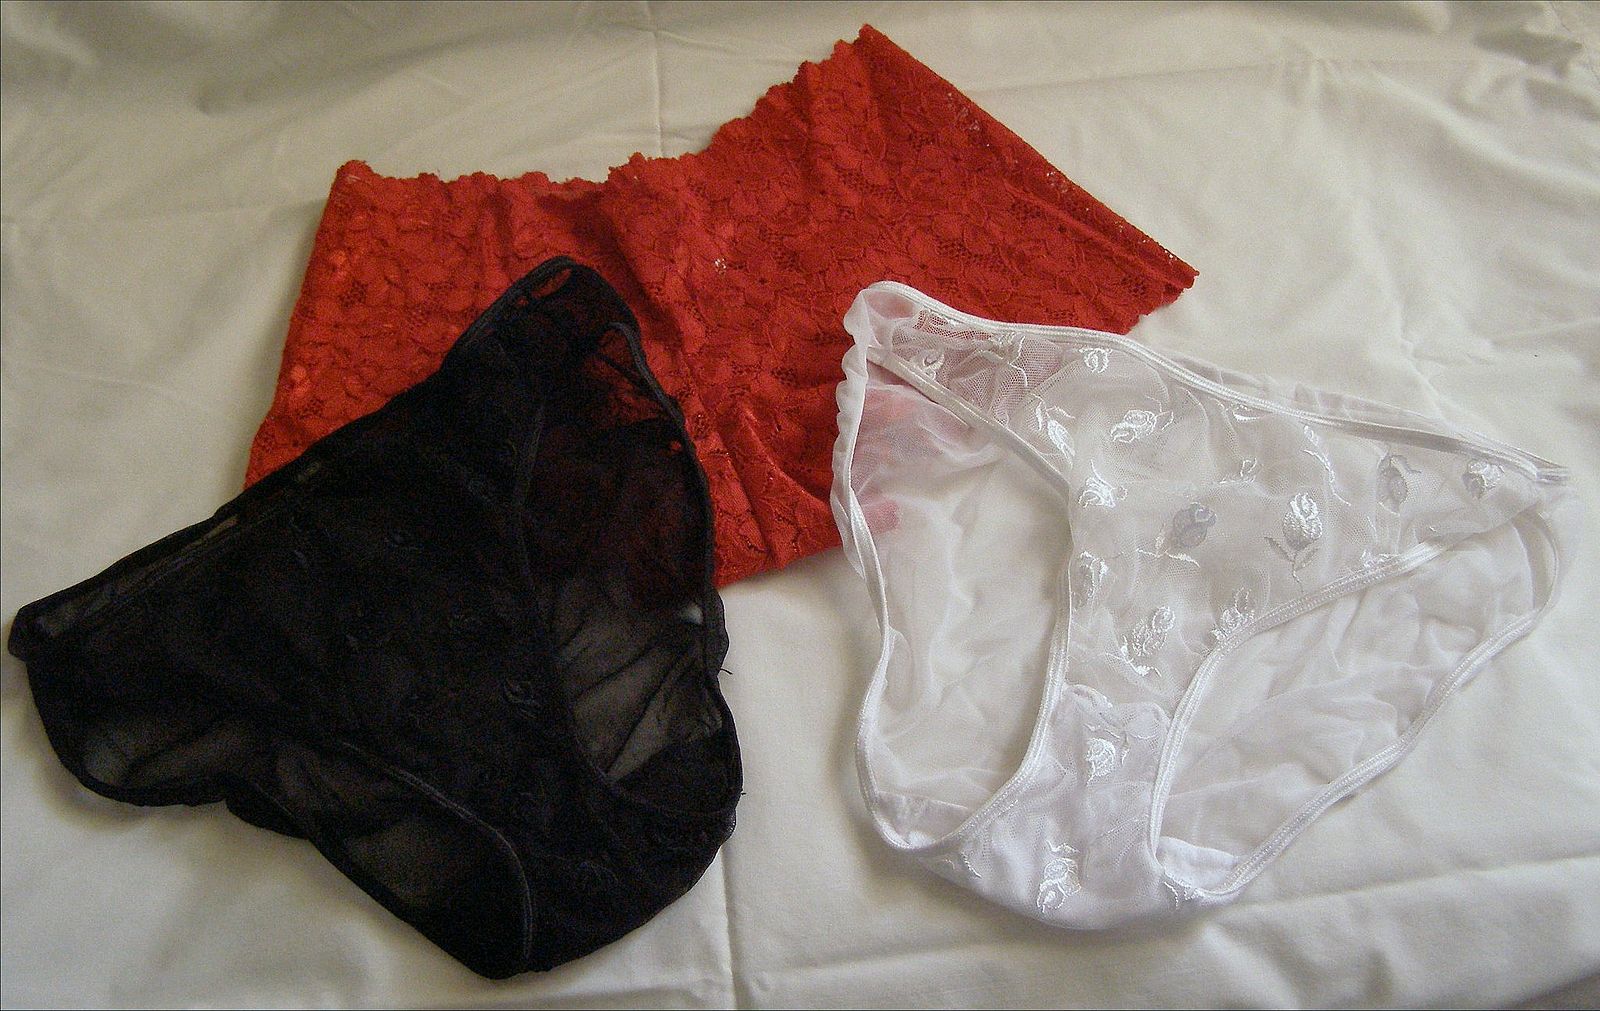 Pics of used panties